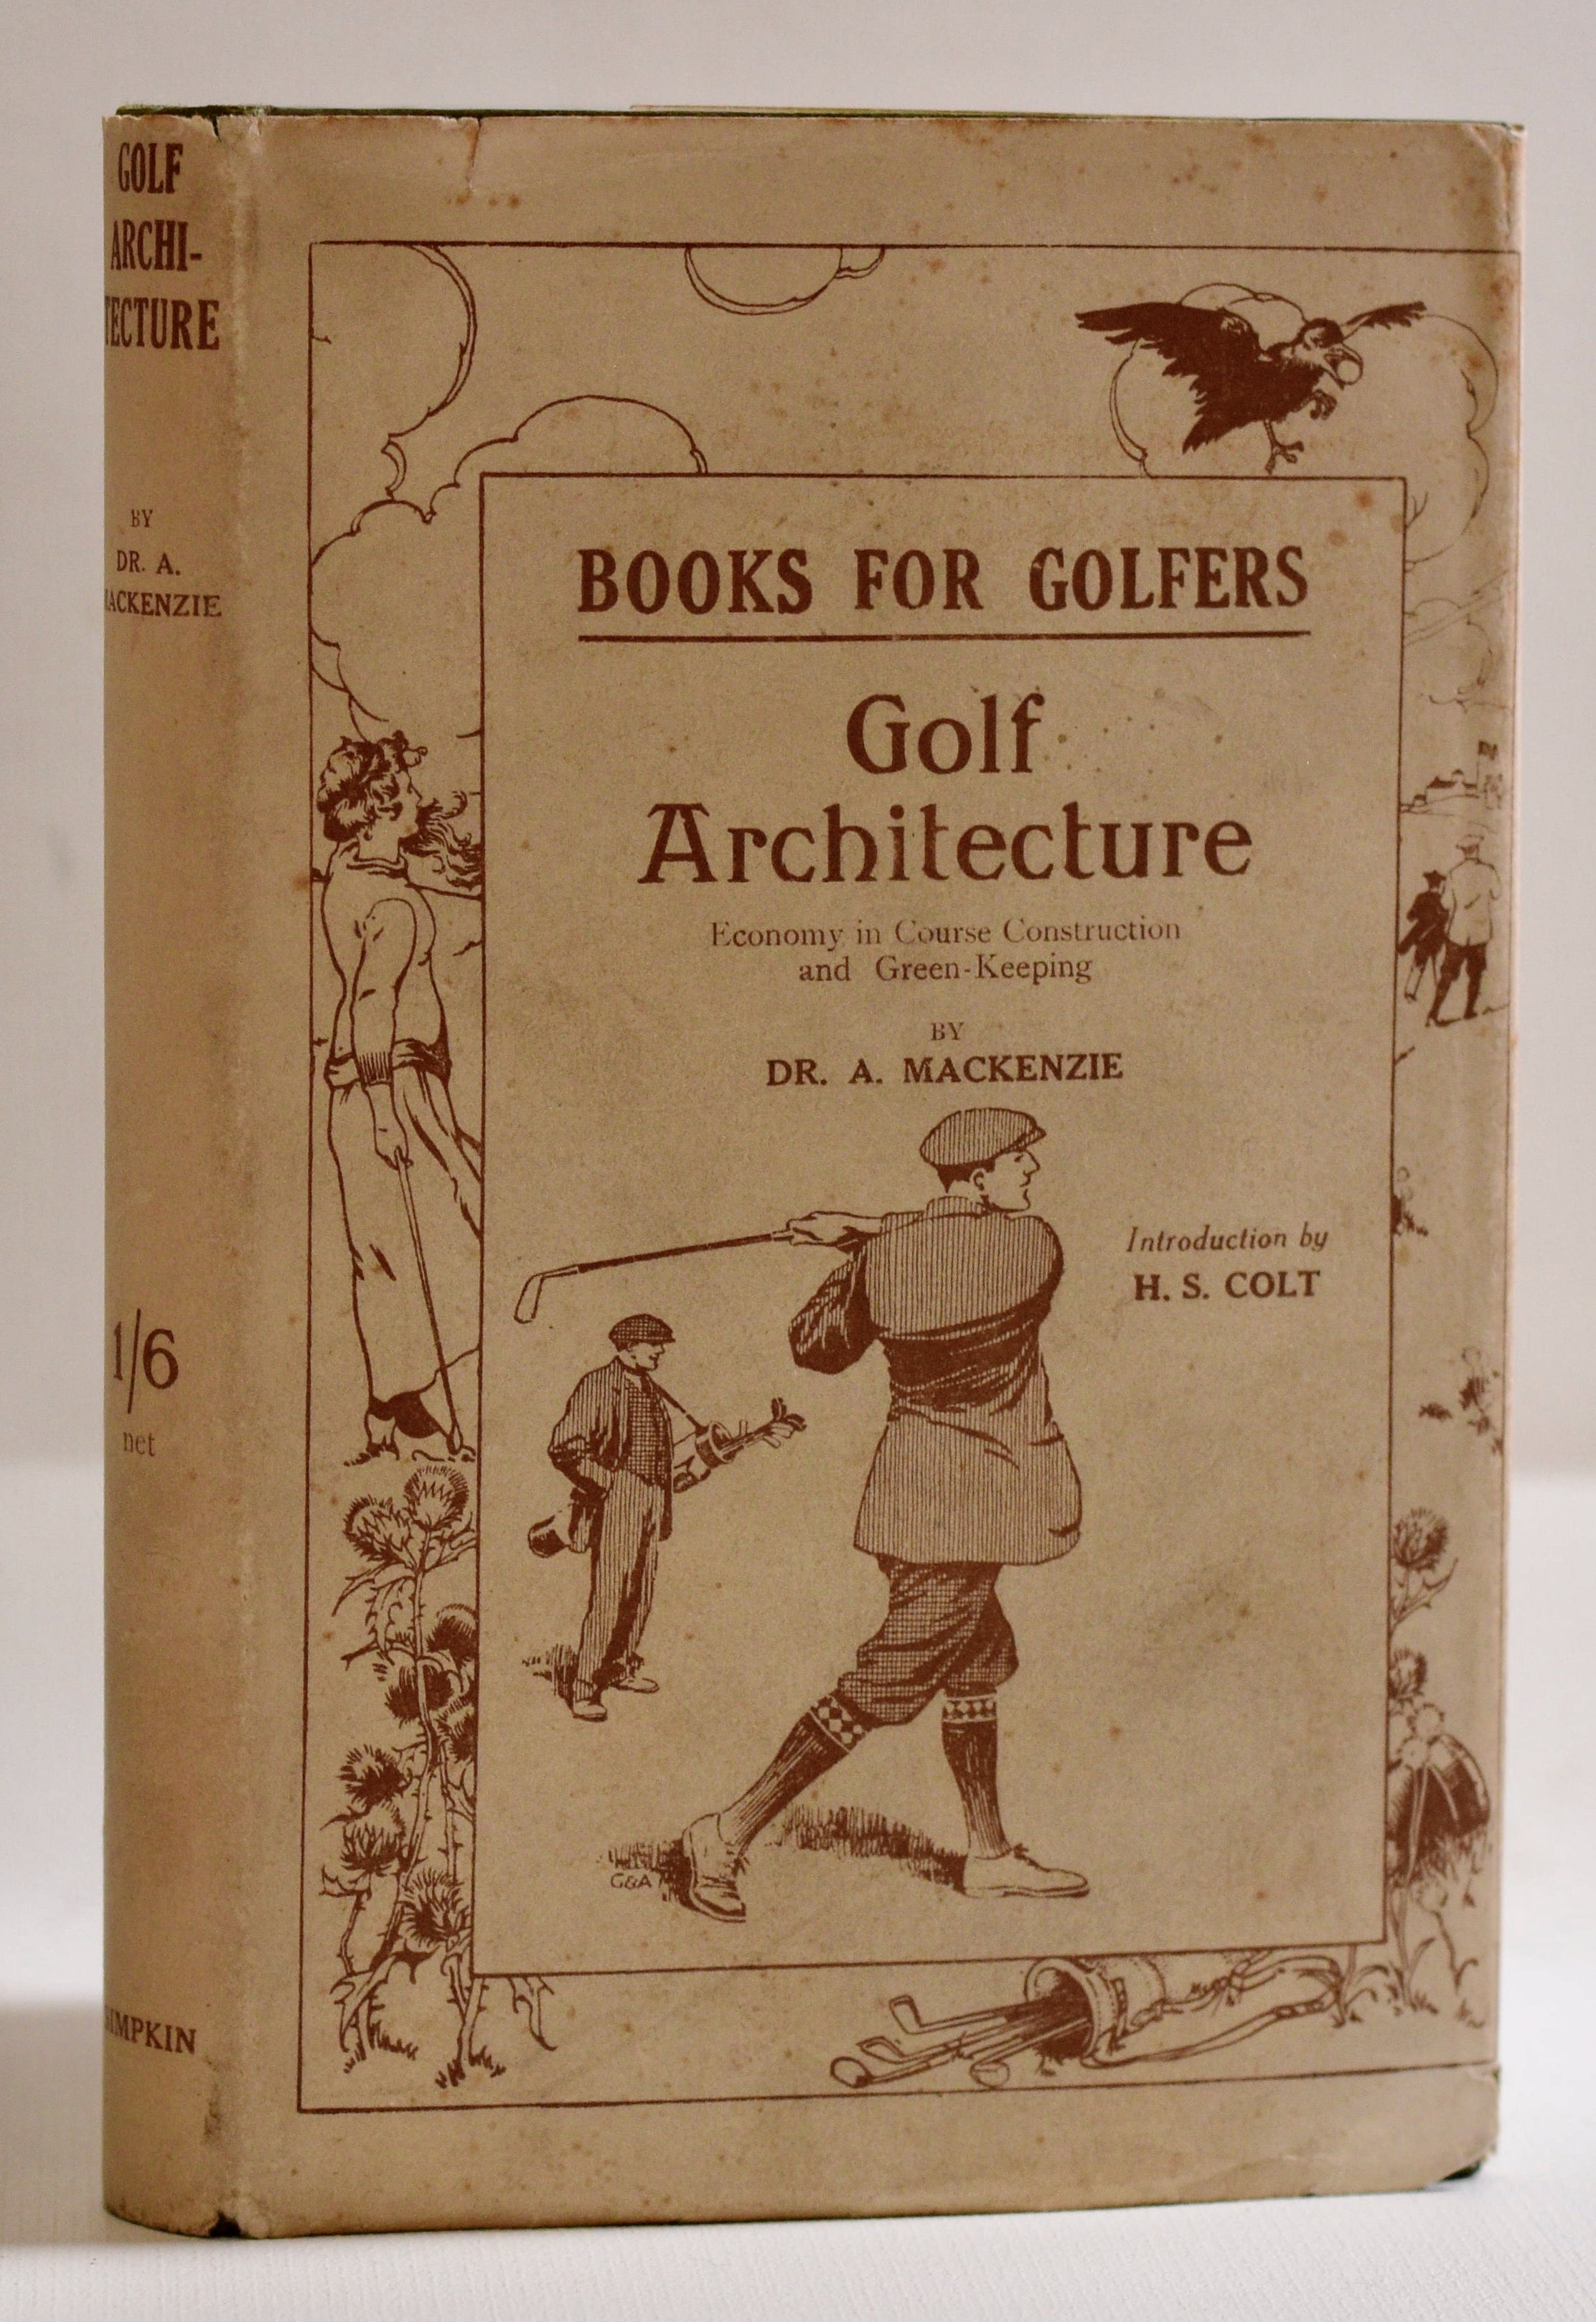 Golf architecture